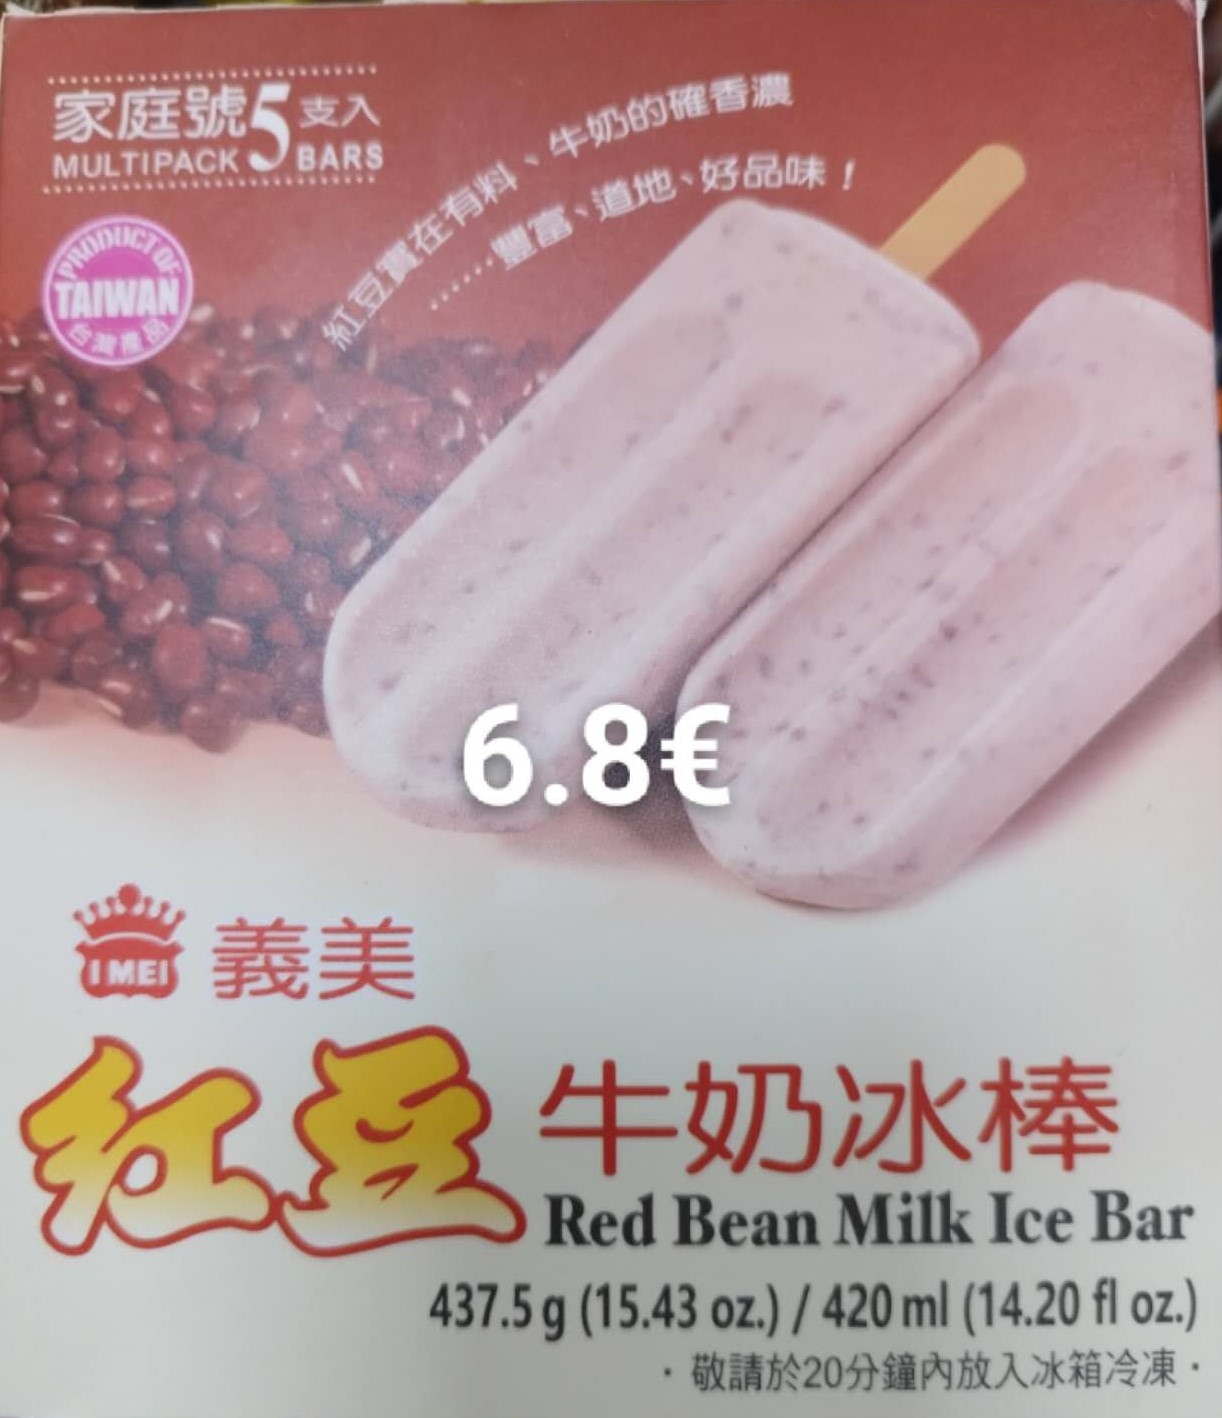 Red Bean Milk Ice Bar